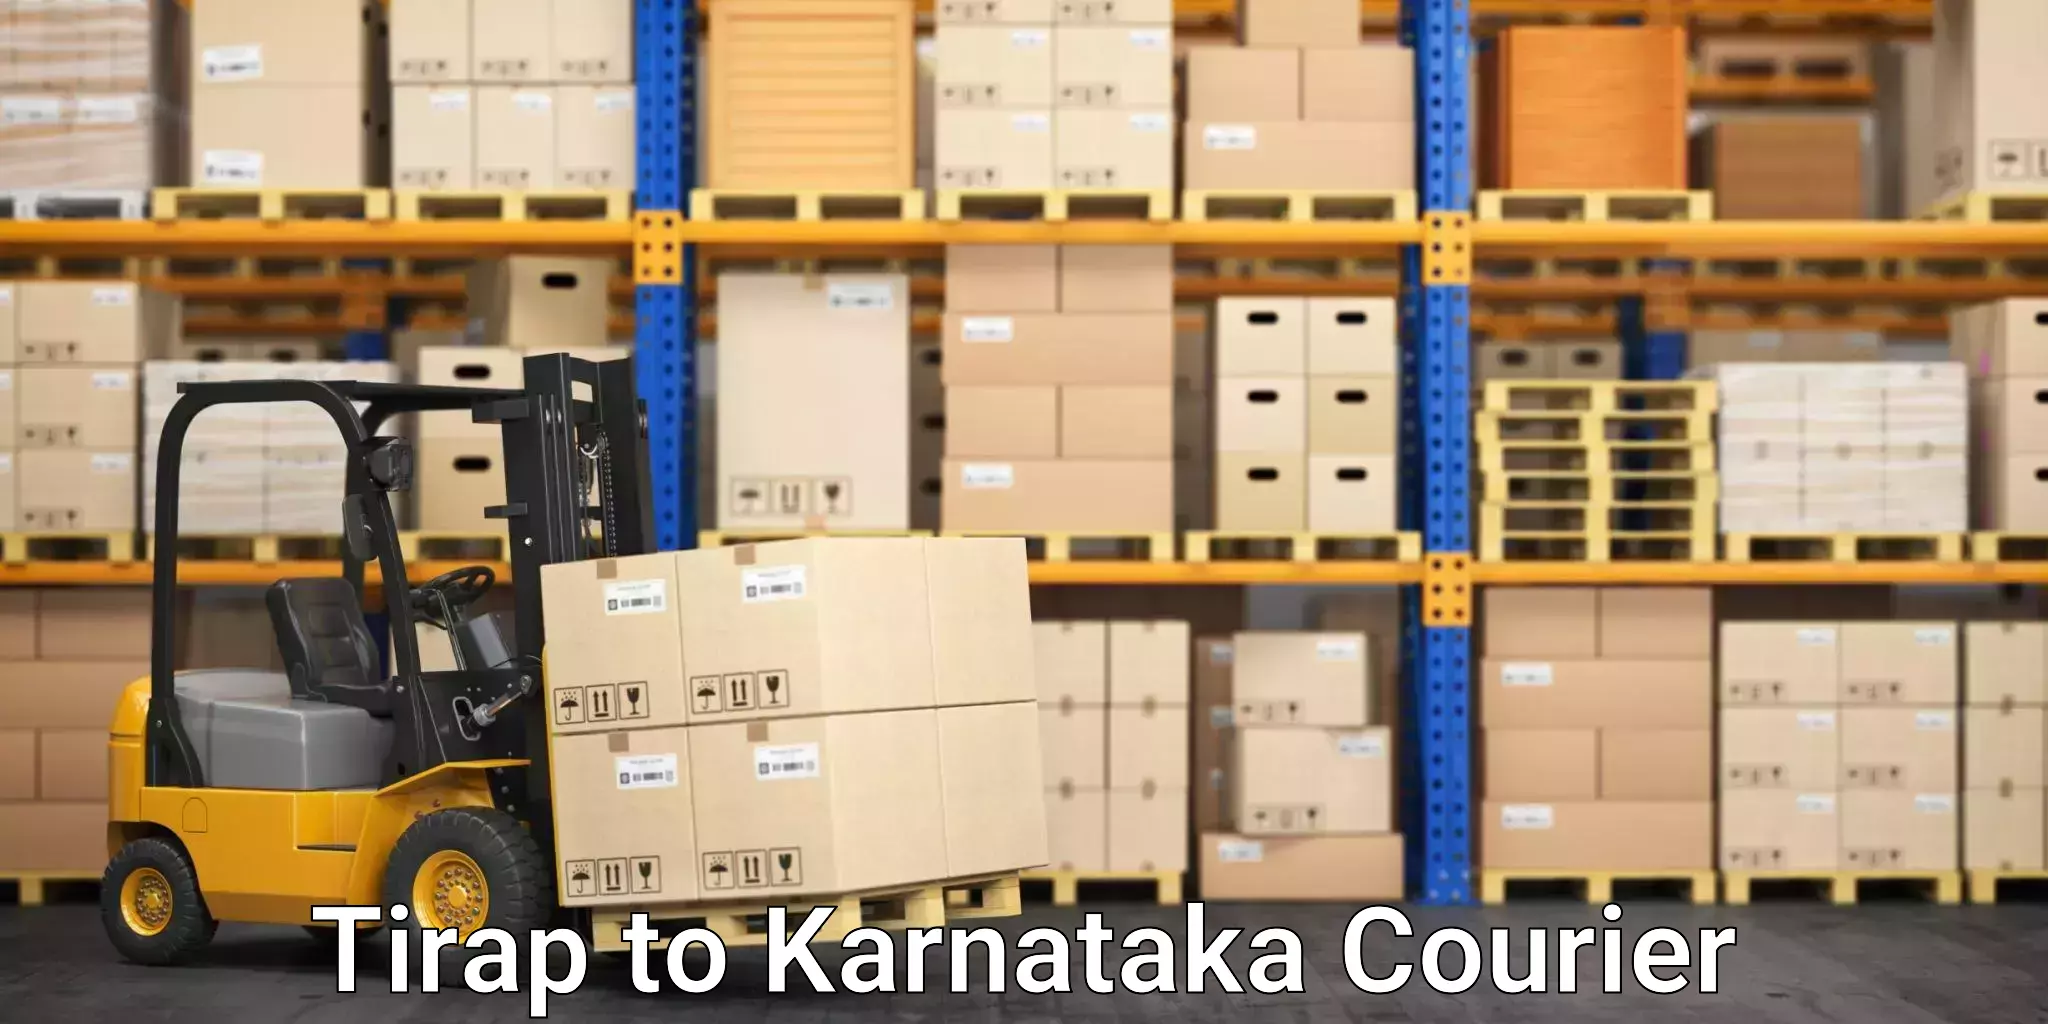 State-of-the-art courier technology Tirap to Karnataka